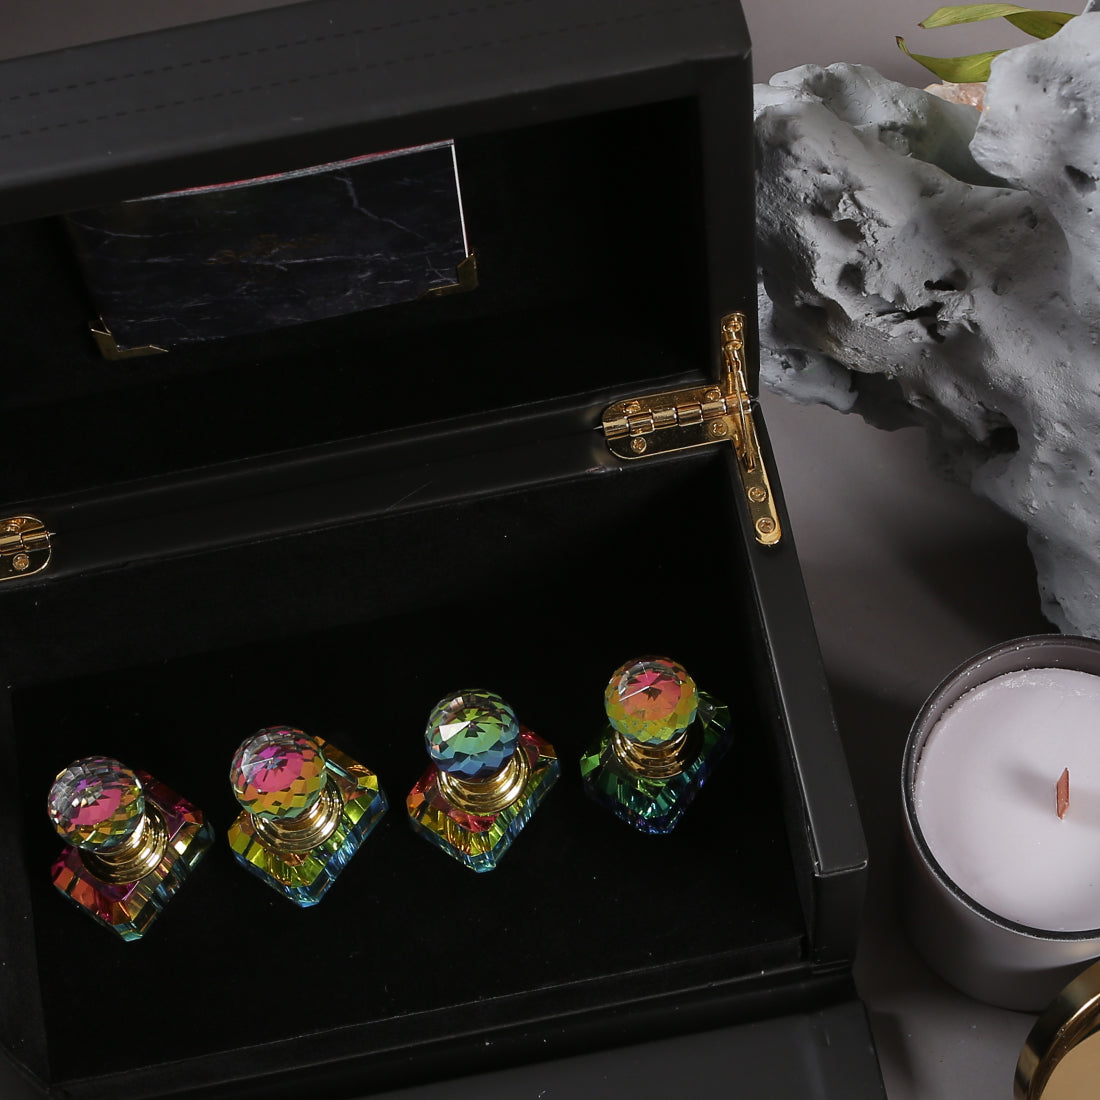 Soirée Luxury Fragrance Gift Set Bundle – Soirée Fragrances